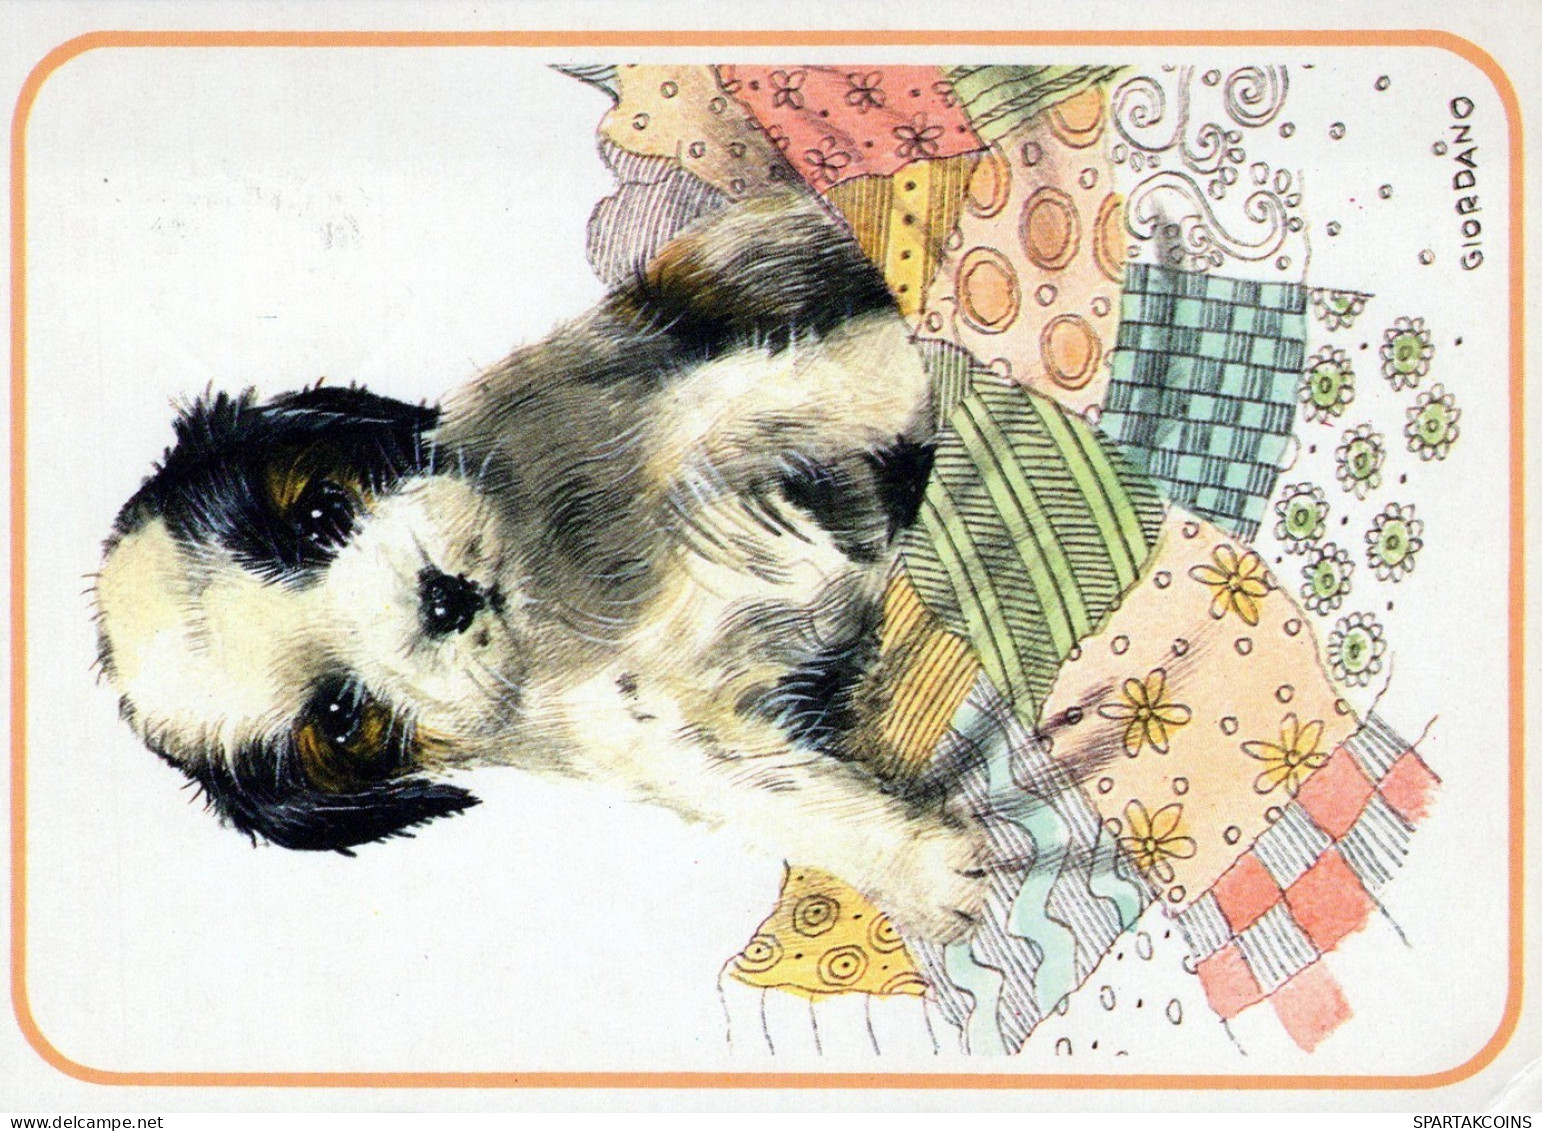 CHIEN Animaux Vintage Carte Postale CPSM #PAN550.A - Hunde